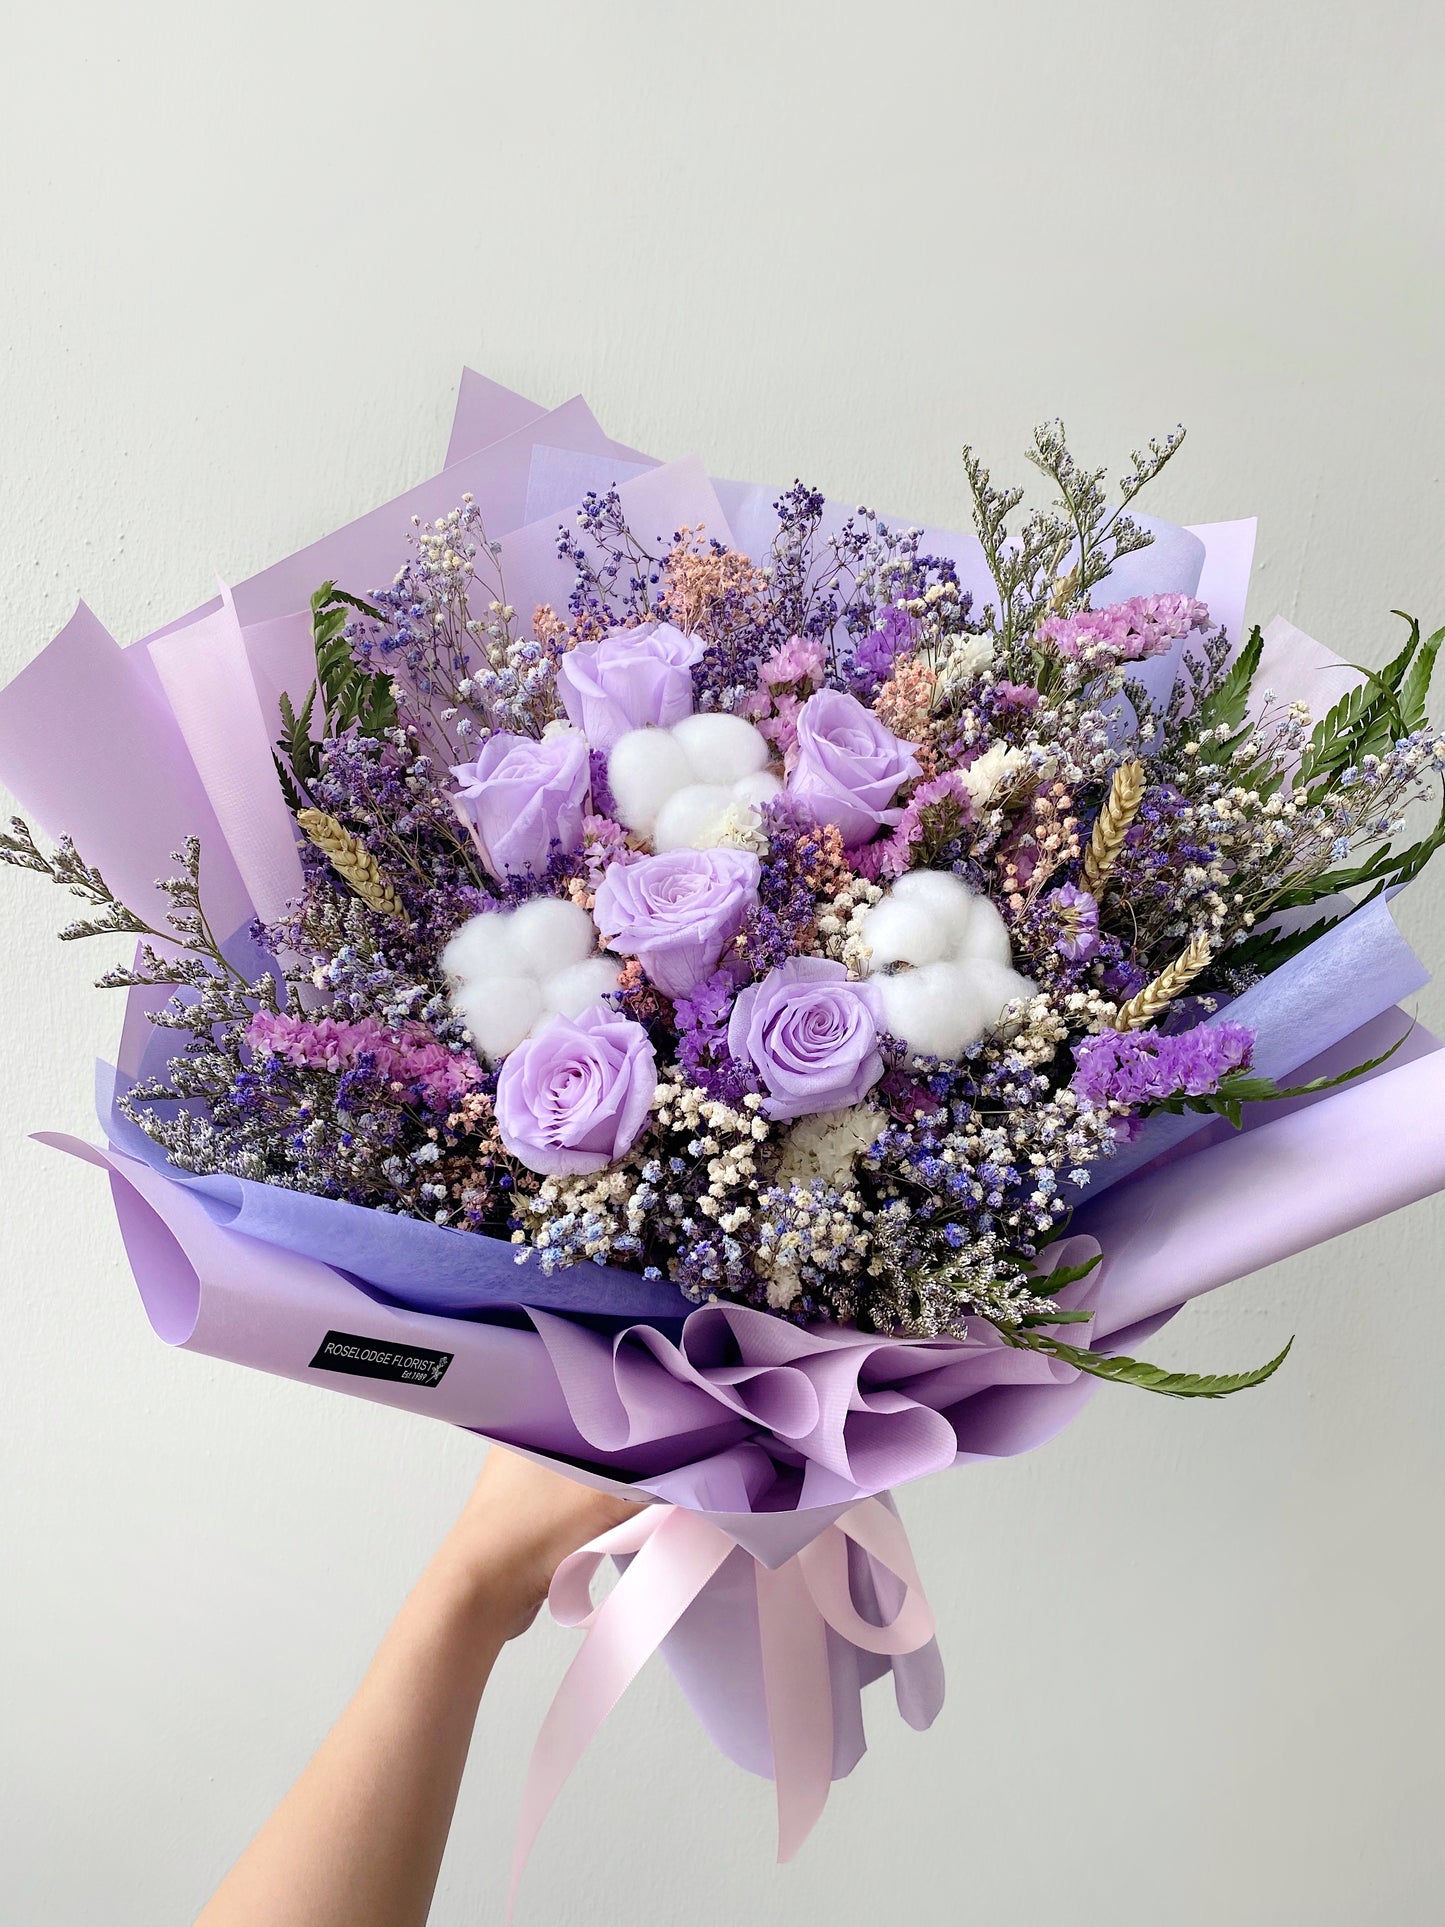 Purple Vibrant Preserved Rose Bouquet